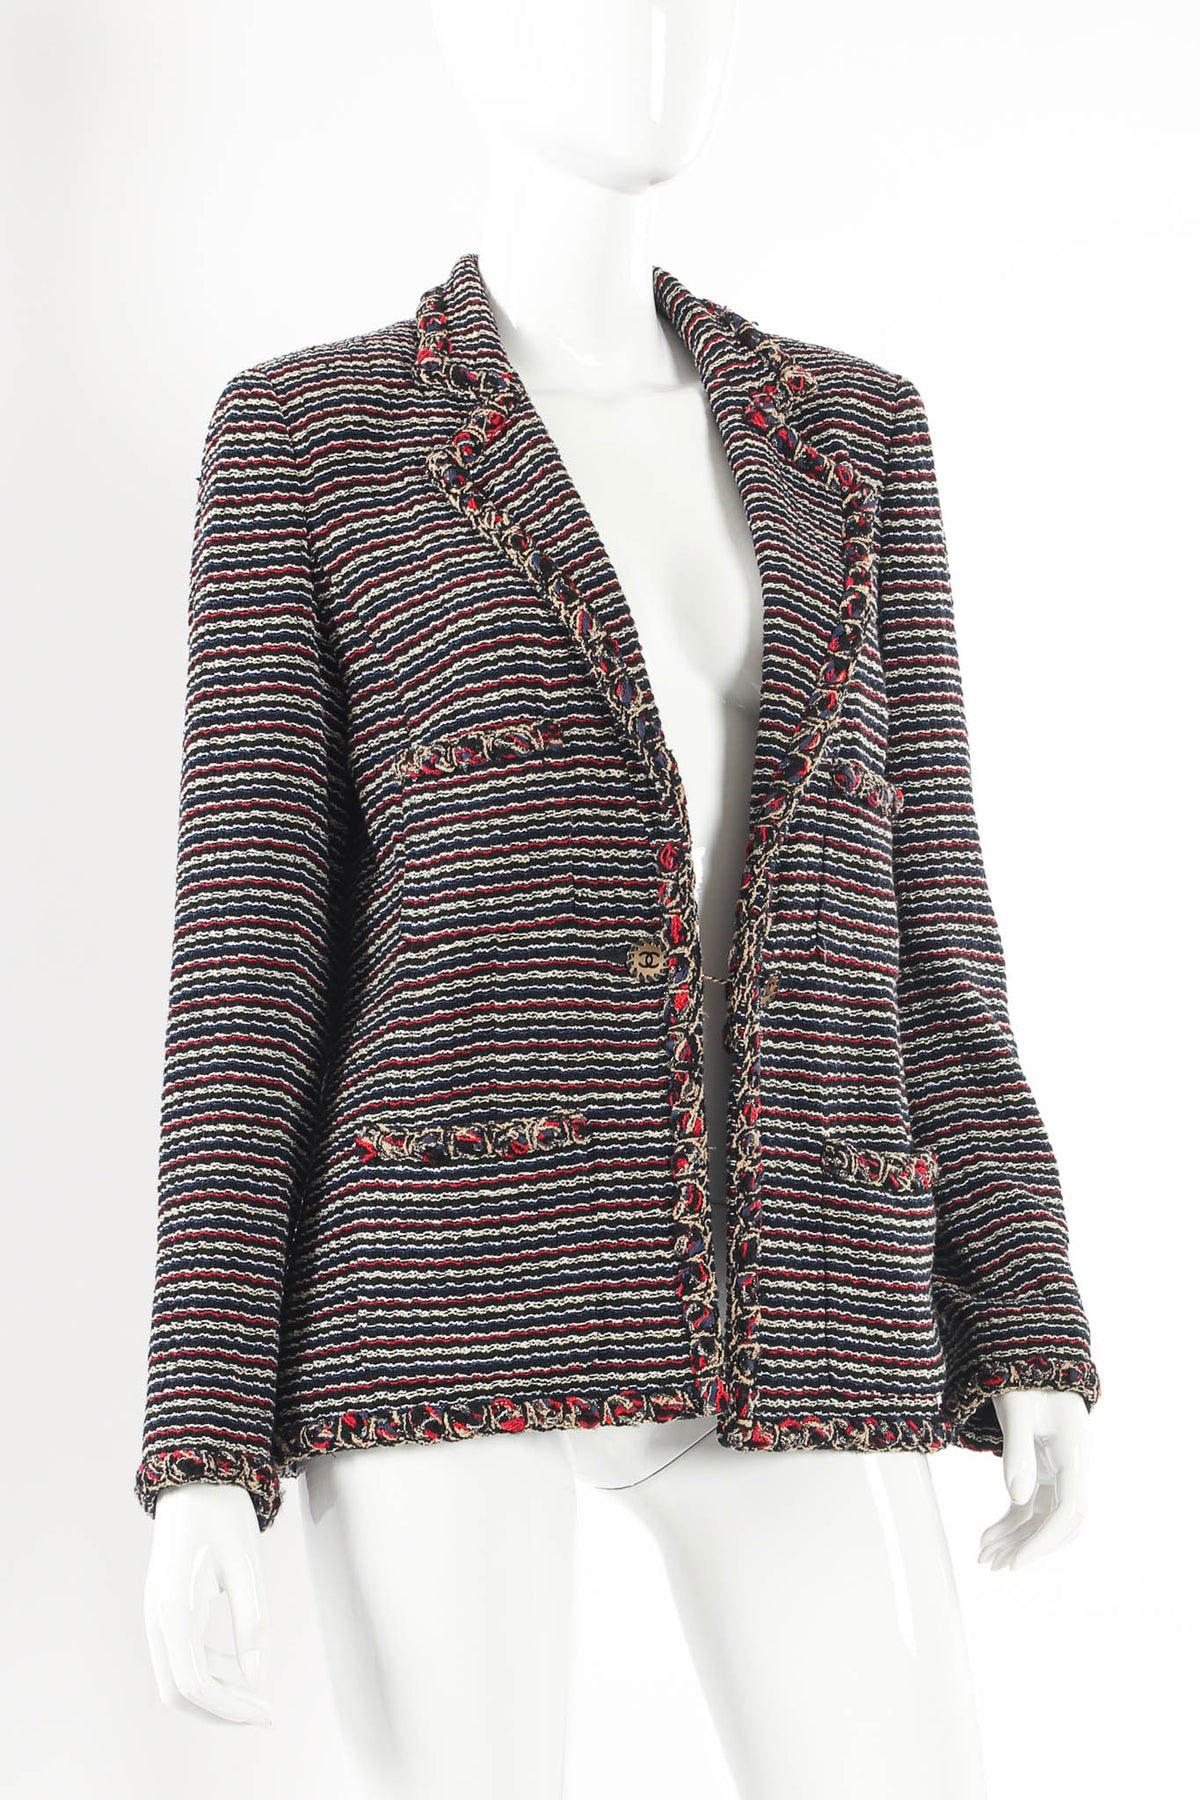 Chanel Runway Saint-Tropez Lesage Tweed Jacket For Sale 6